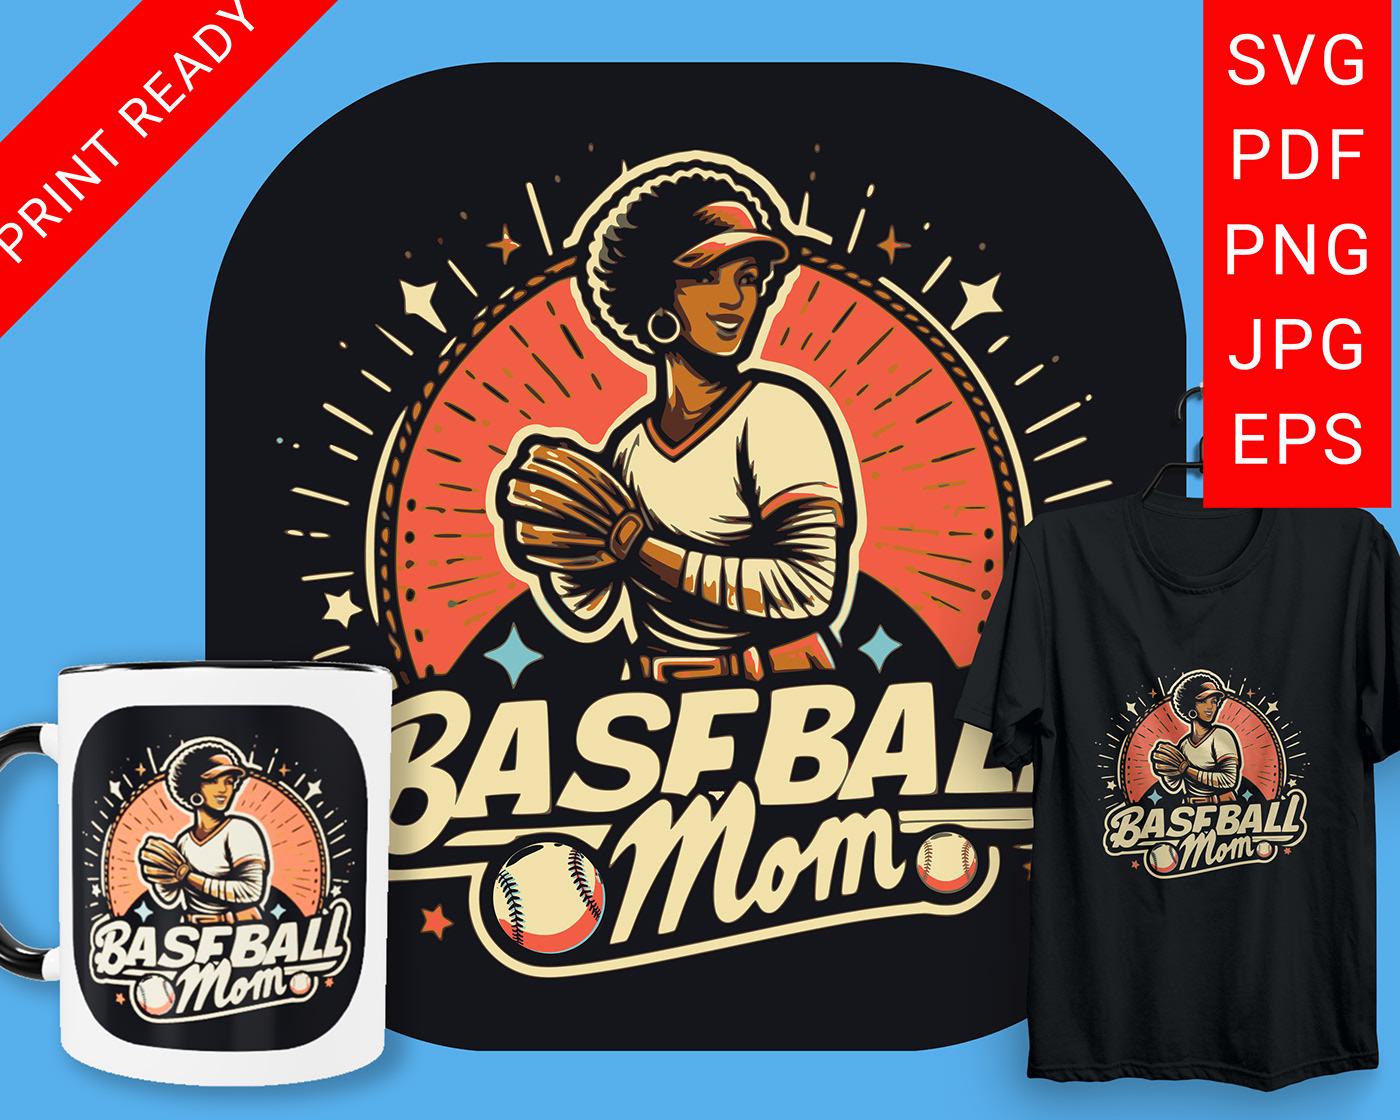 Baseball Mom SVG Black mum pitcher playing baseball Prints for ma t-shirts, mugs. Print Ready 